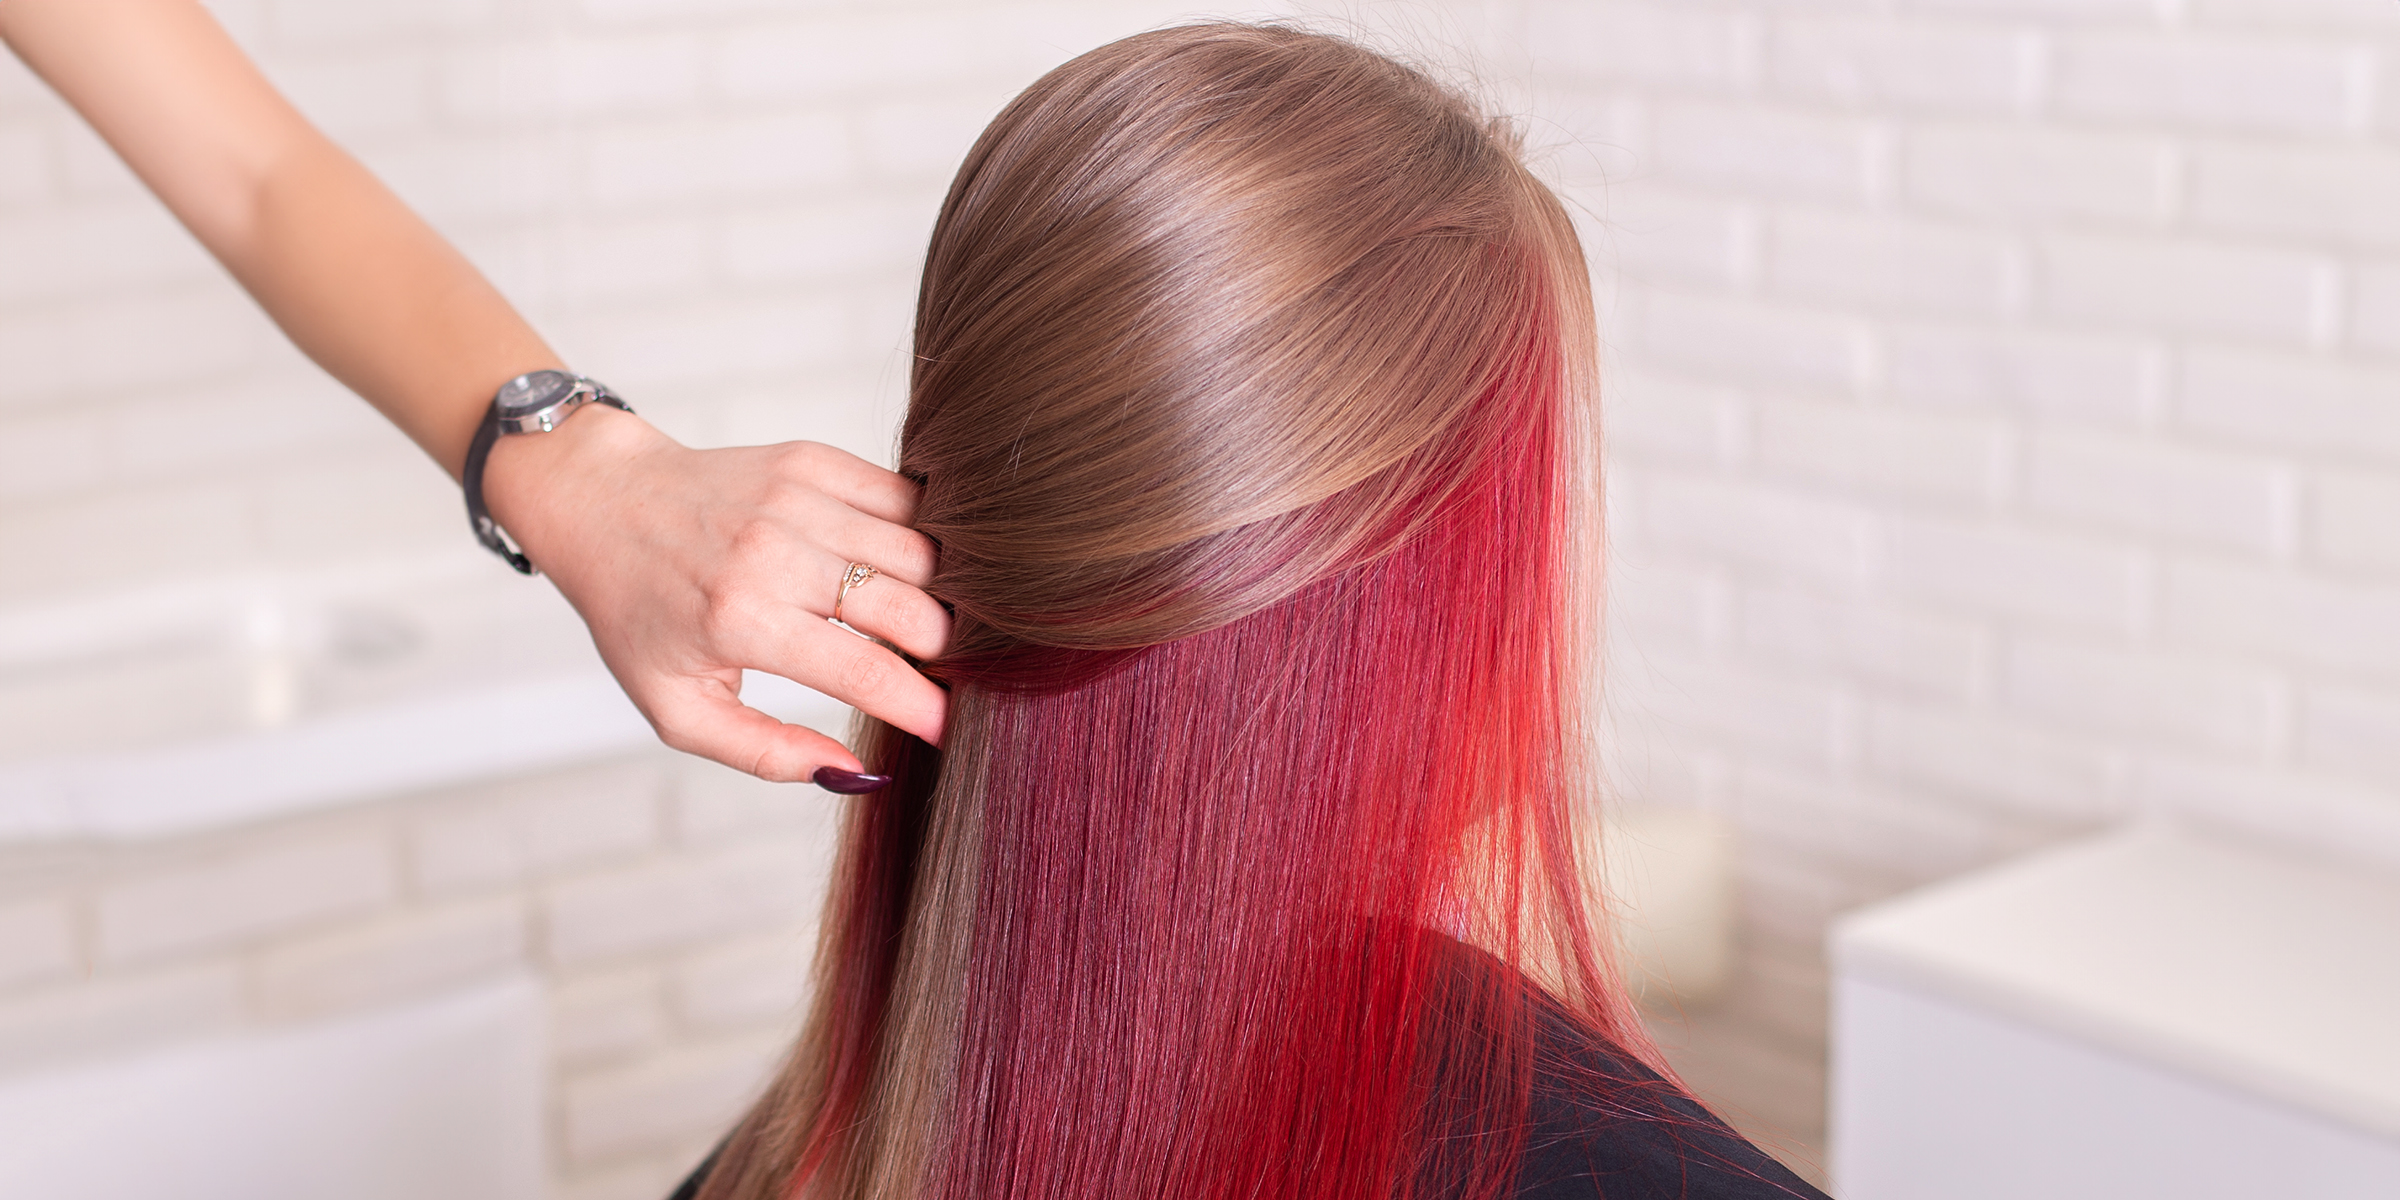 Brown hair with red underlights | Source: Shutterstock